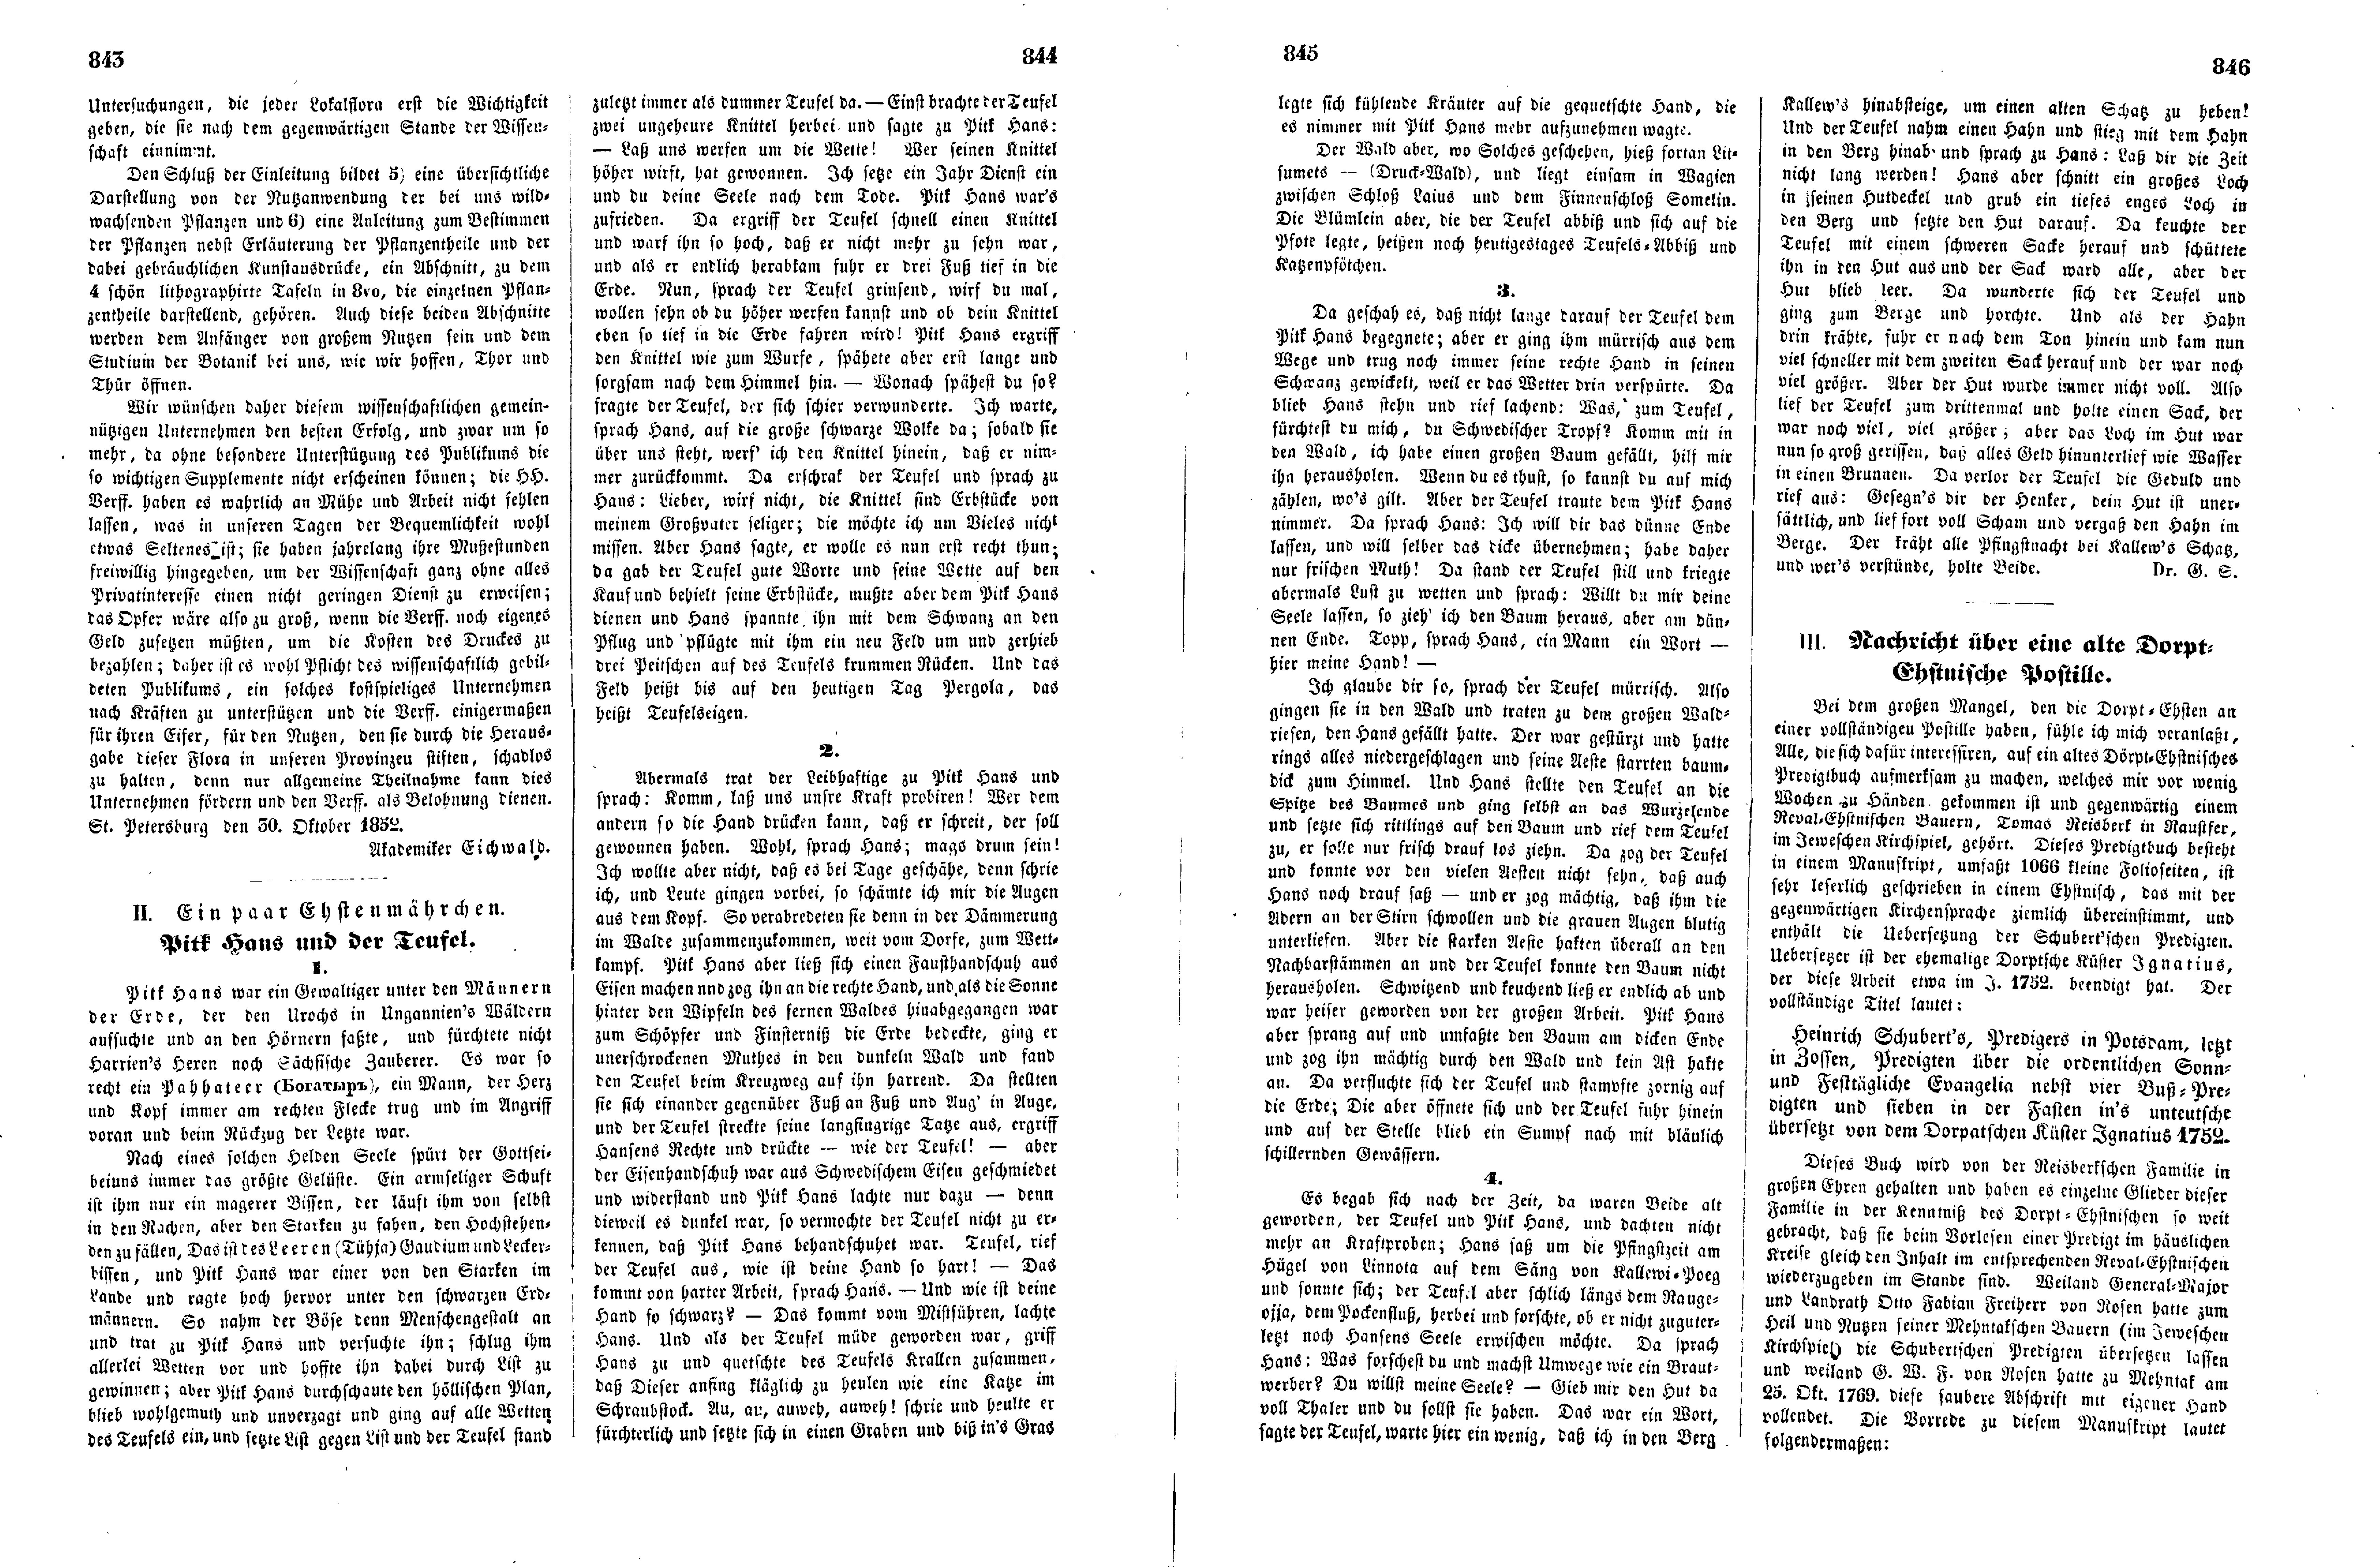 Das Inland [17] (1852) | 216. (843-846) Main body of text